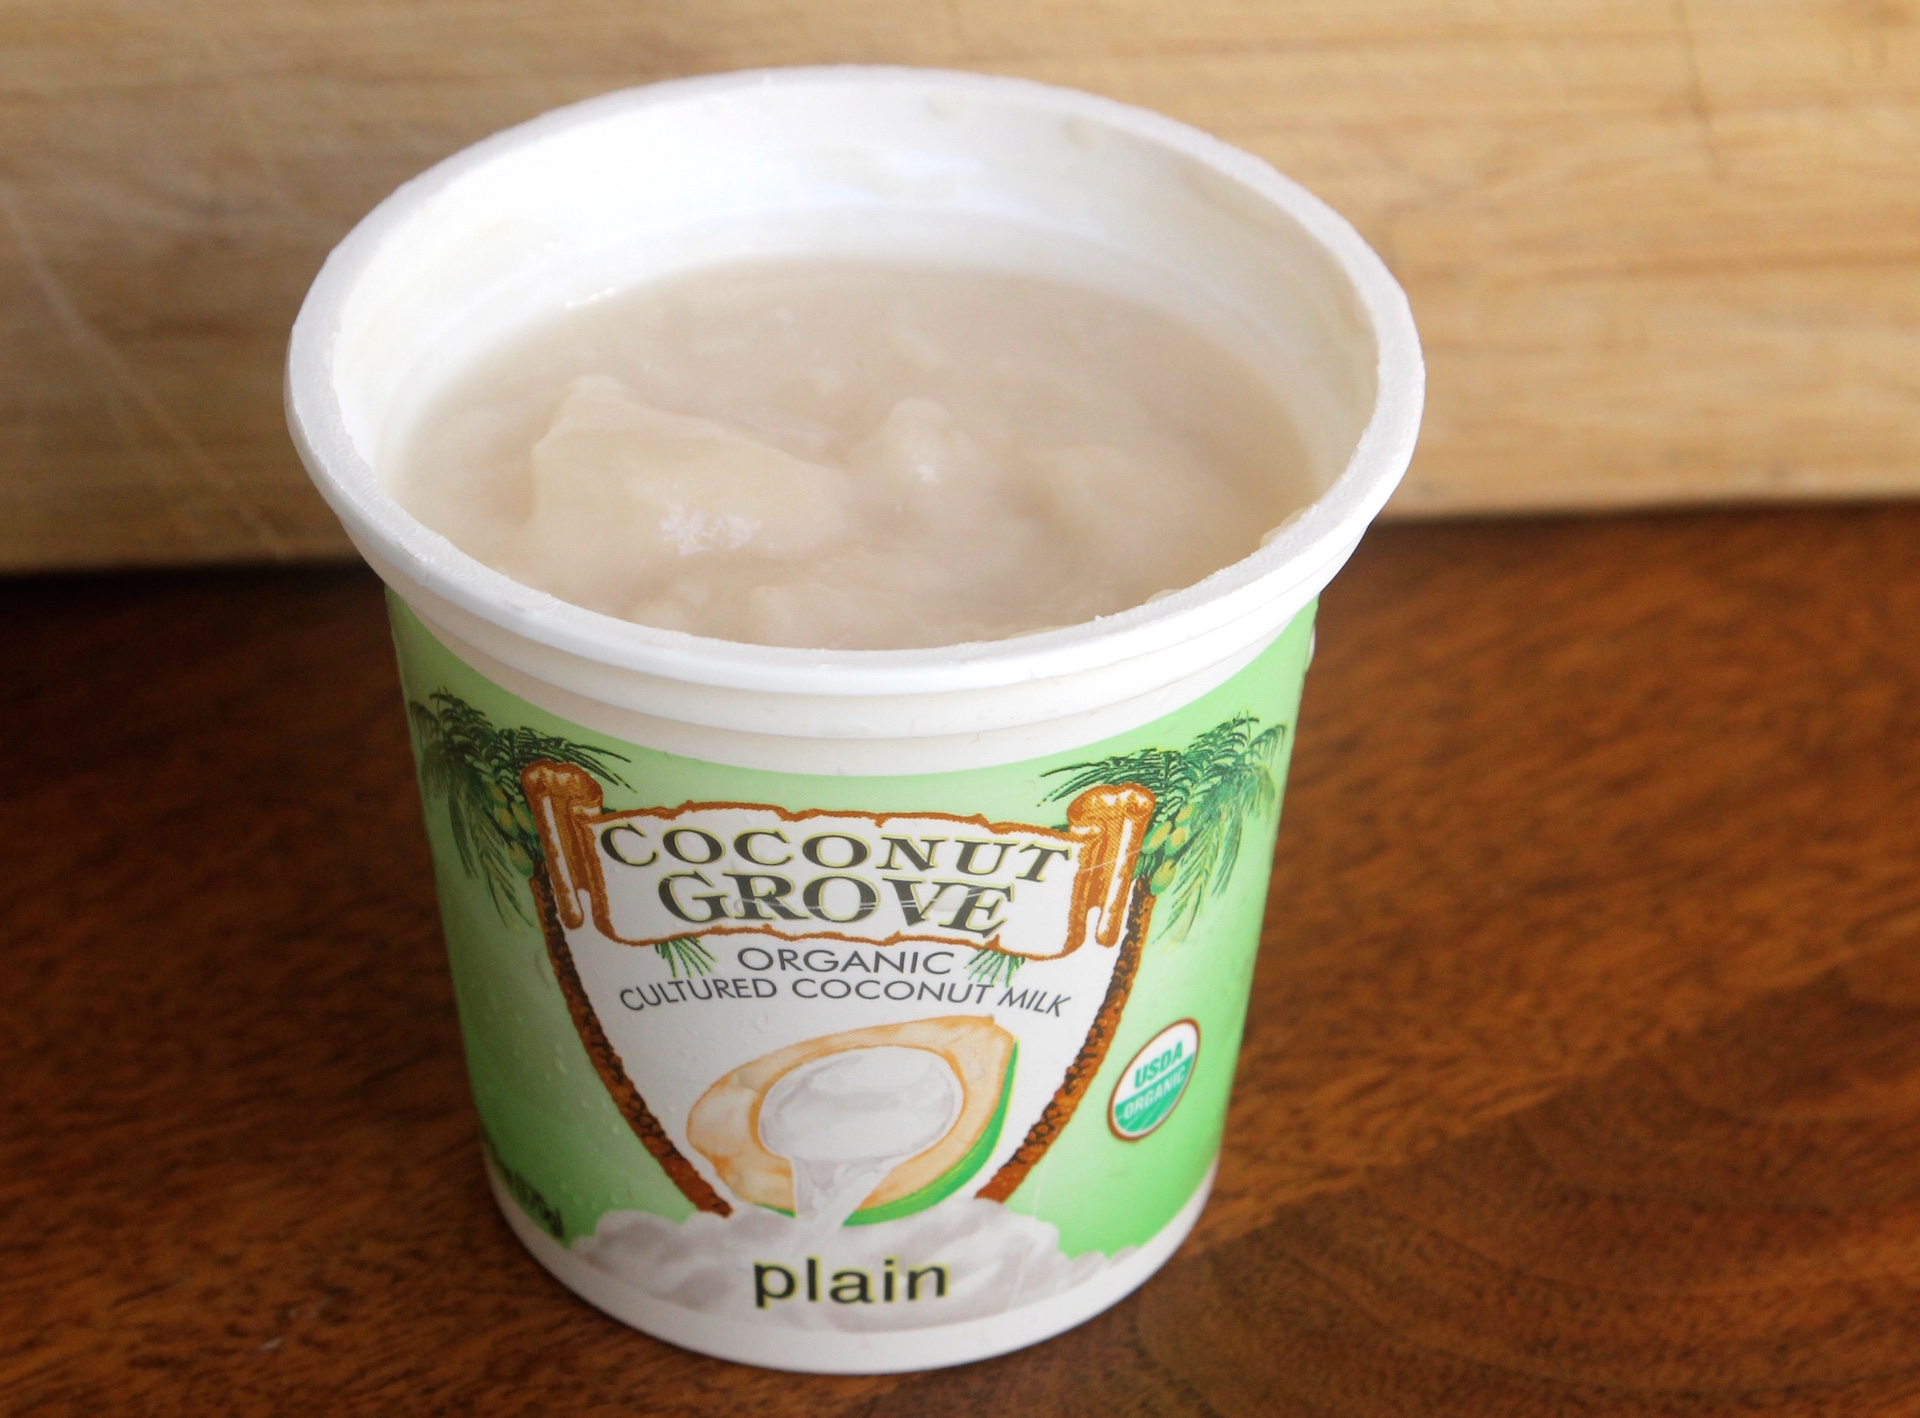 Coconut Grove coconut milk yogurt. 